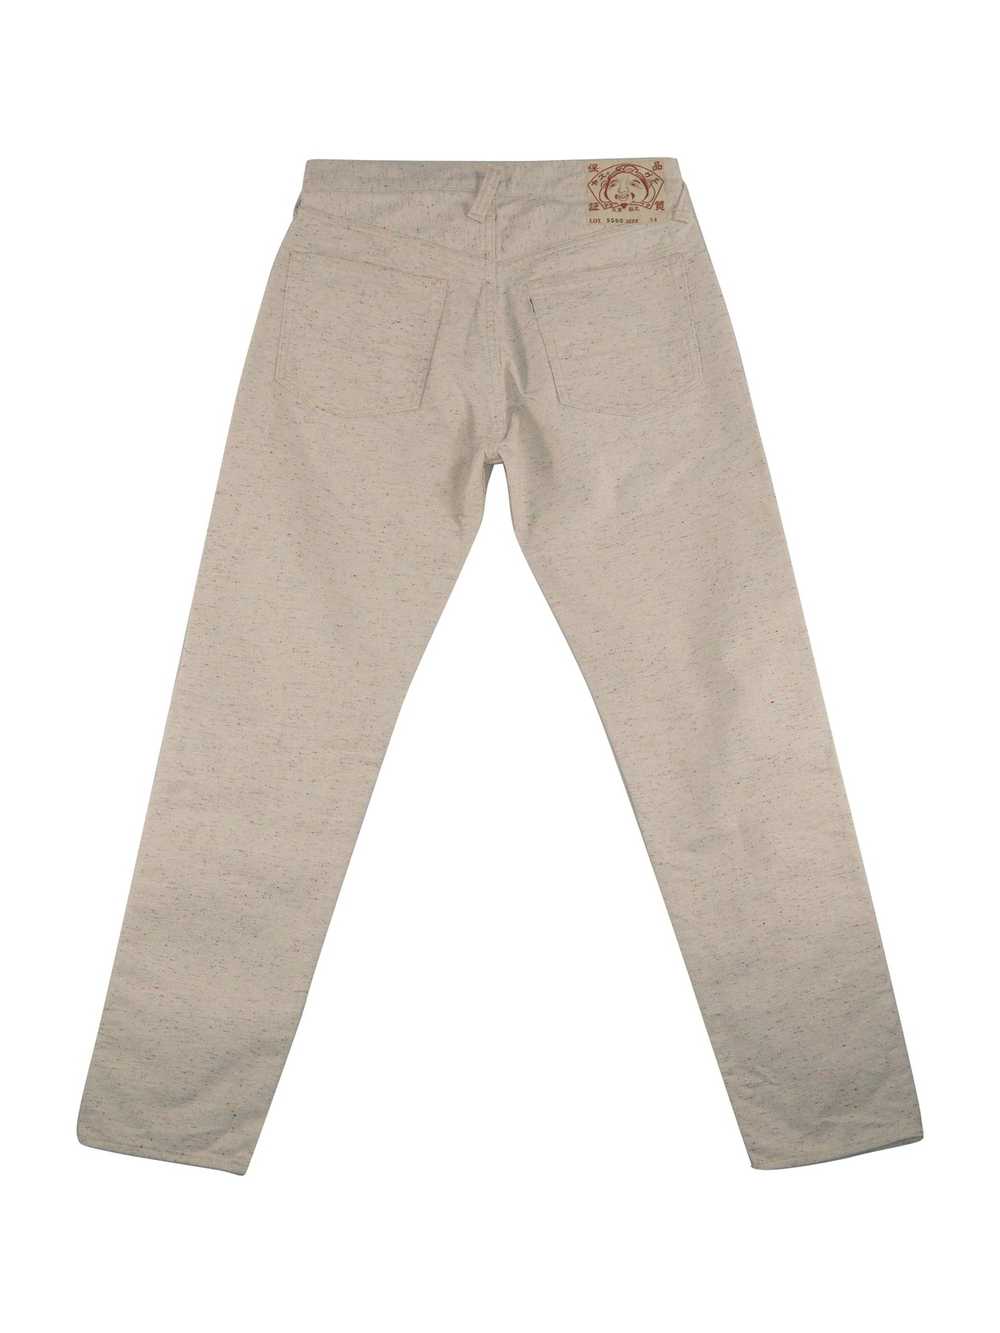 Evisu Multicolor Tweed White Denim Jeans Pants - image 1